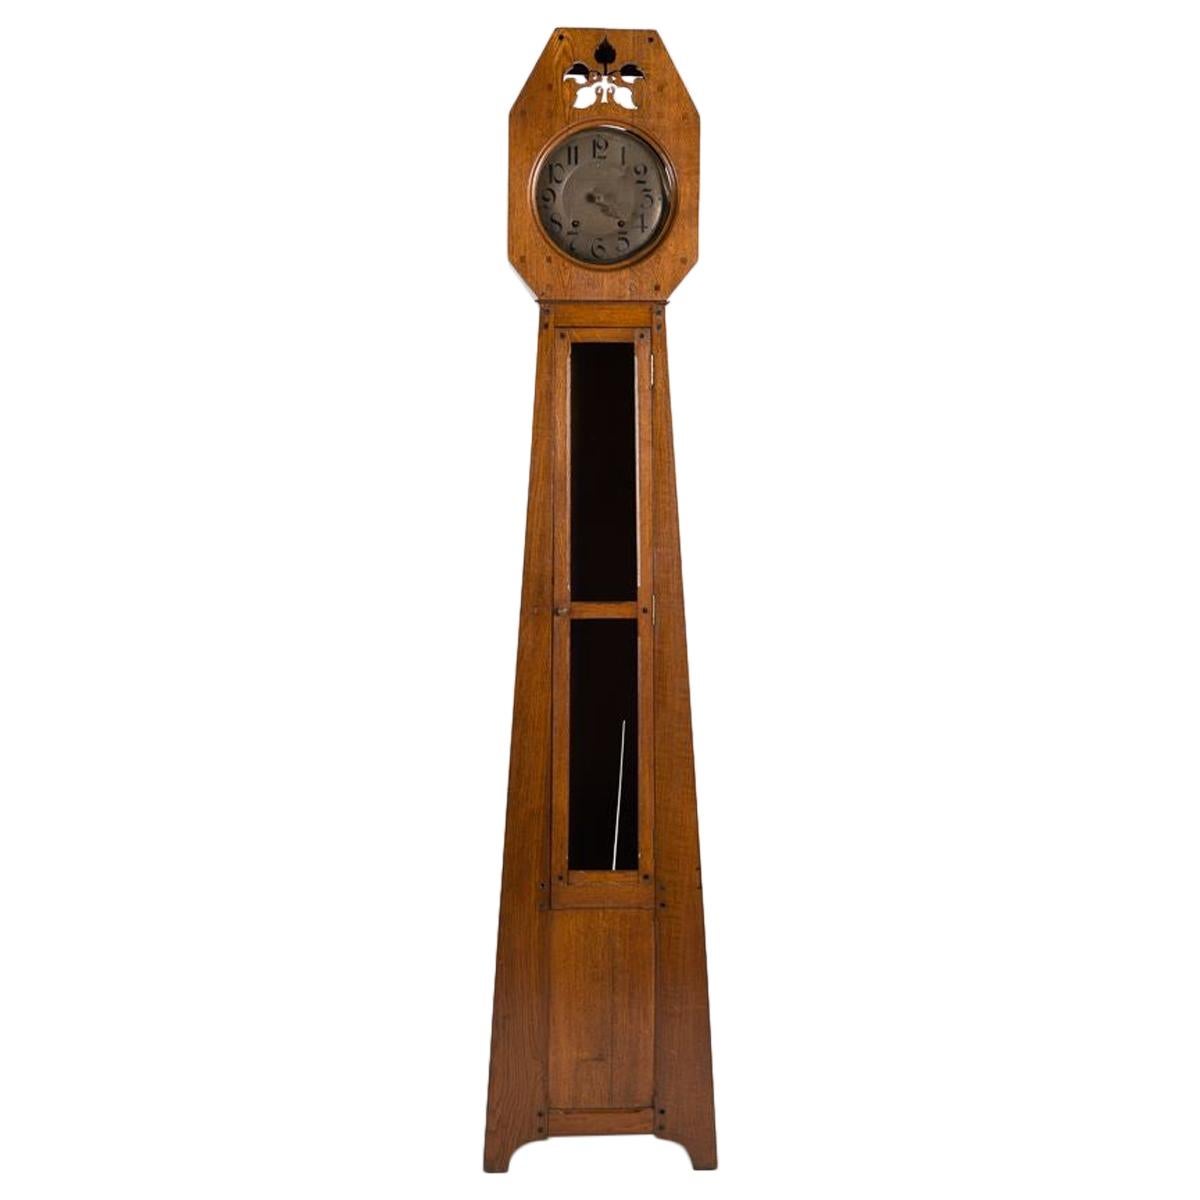 Léon Jallot, Oak Grandfather Clock, France, 1910